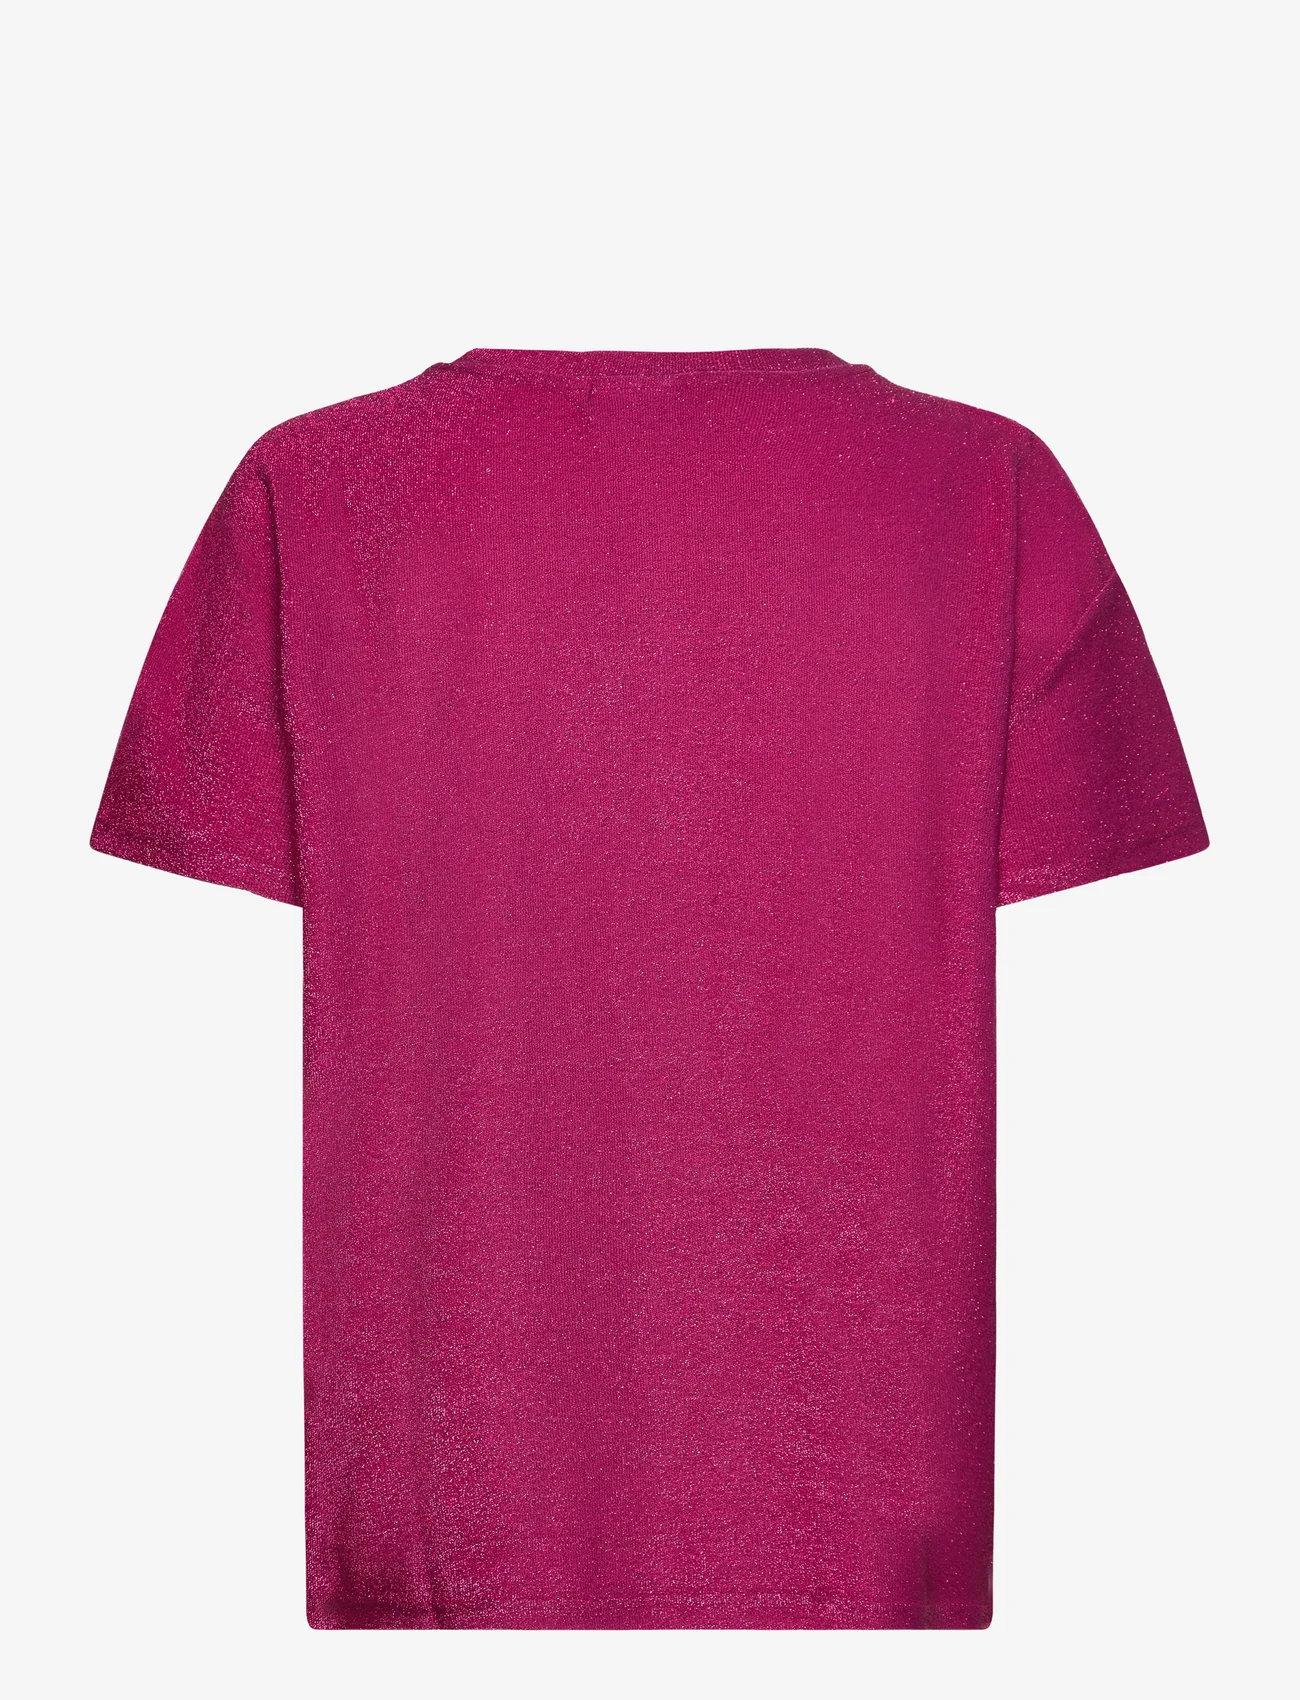 Coster Copenhagen - Shimmer tee in lurex jersey - t-shirts - pink shimmer - 1